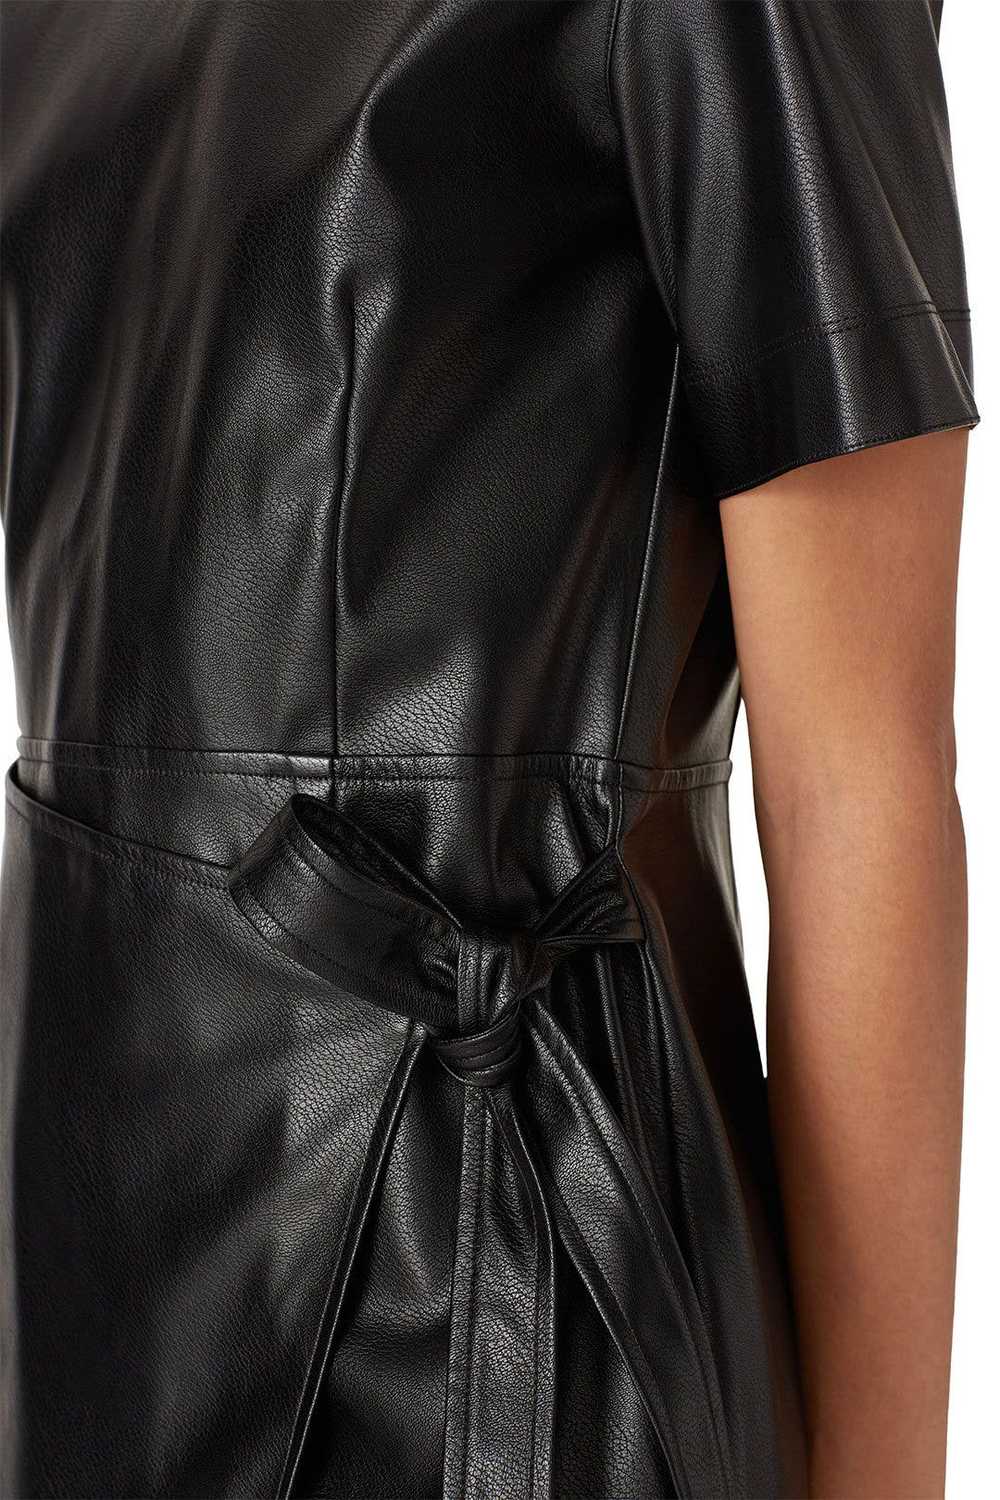 Natori Black Faux Leather Wrap Dress - image 4